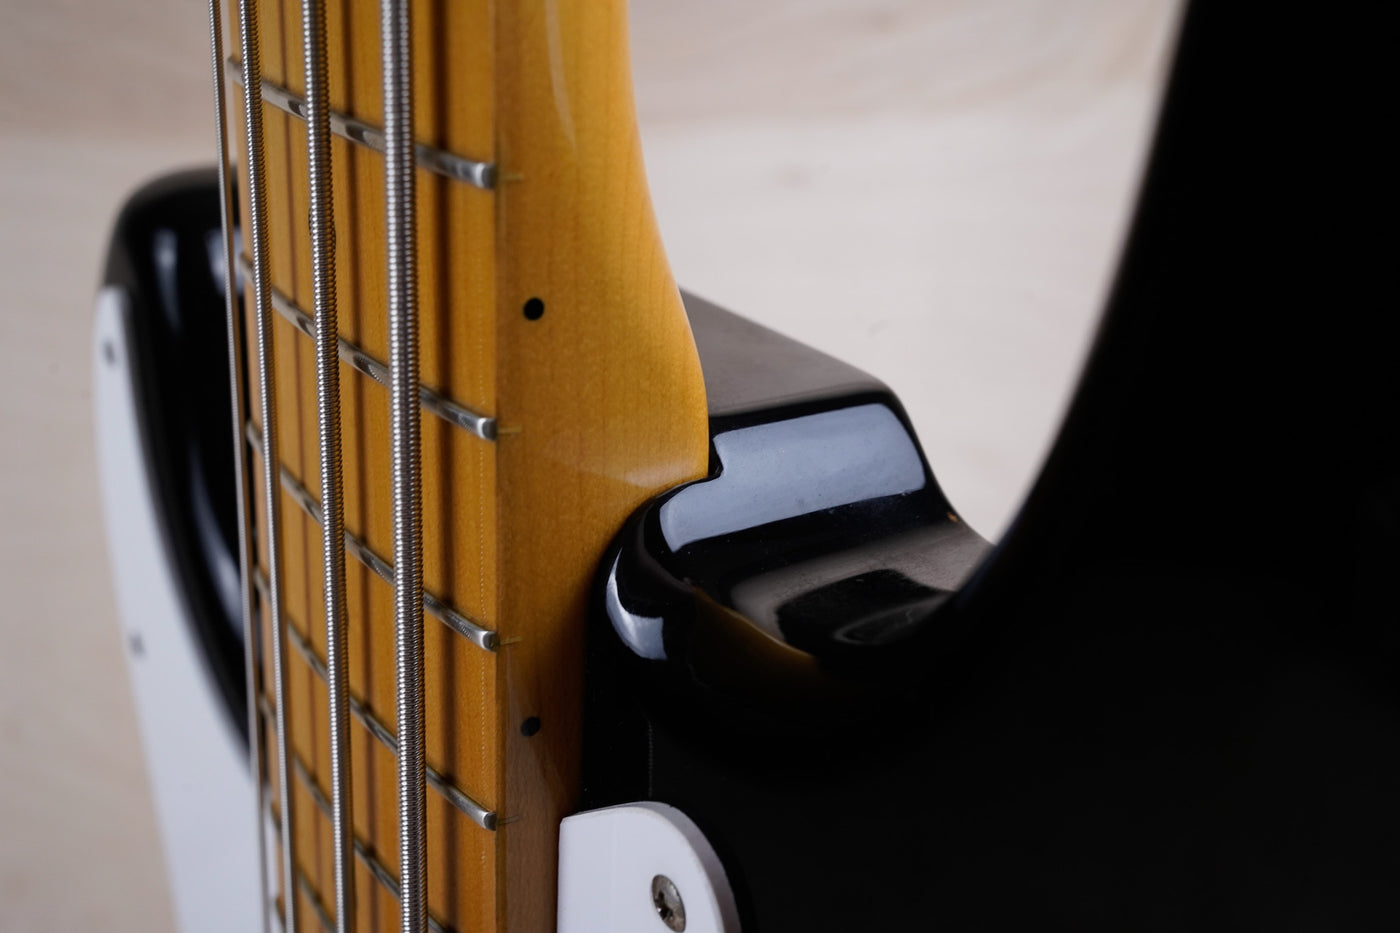 Fender PB57-65LH Precision Bass Reissue Left Handed CIJ 2006 Black w/ Bag